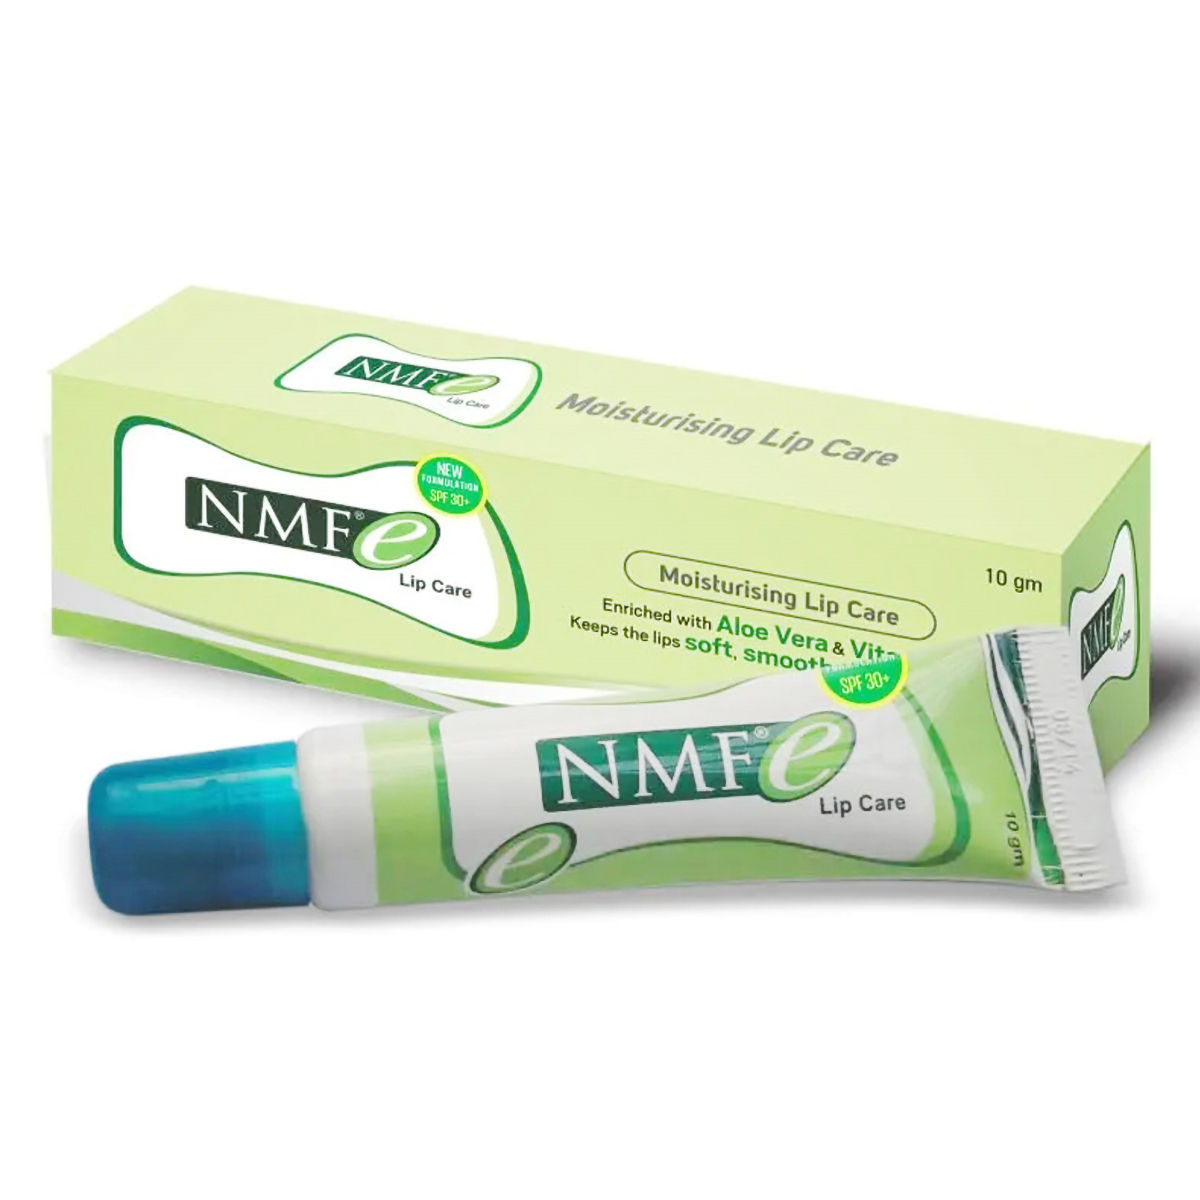 Buy Nmfe Lip Care, 10 gm Online